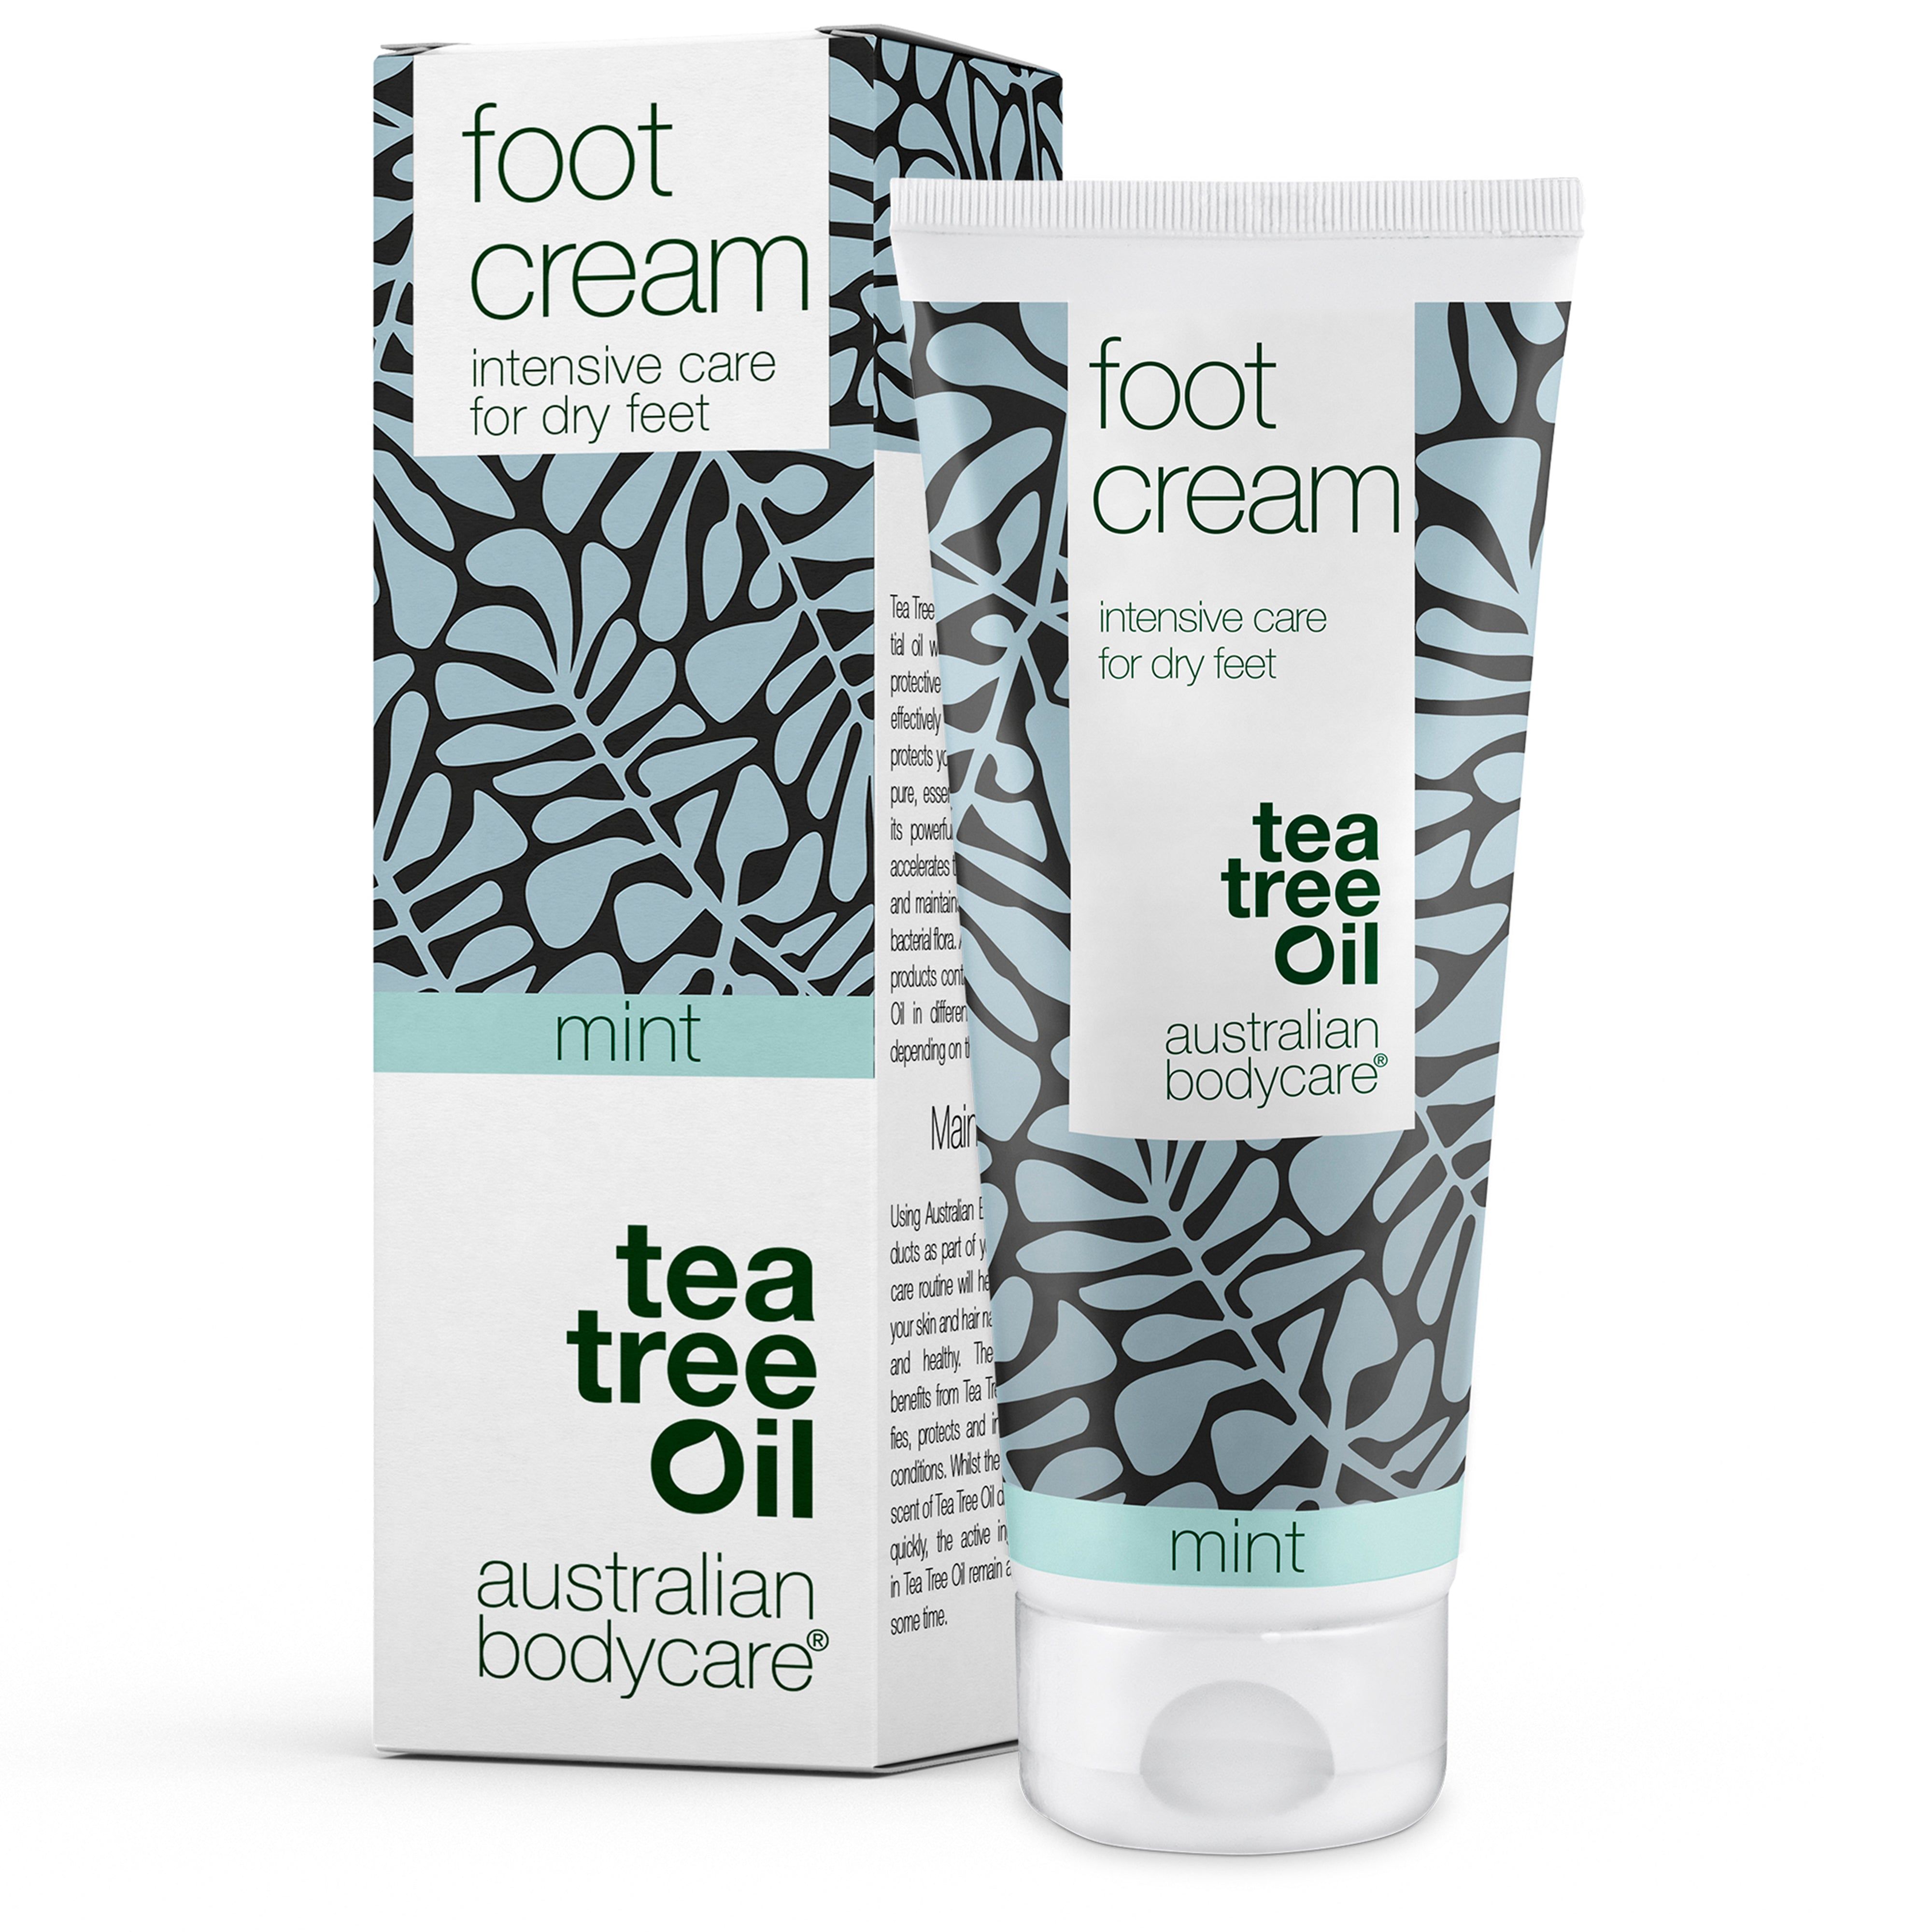 Australian Bodycare Teebaumöl und mint Fußcreme mit 10 % Urea